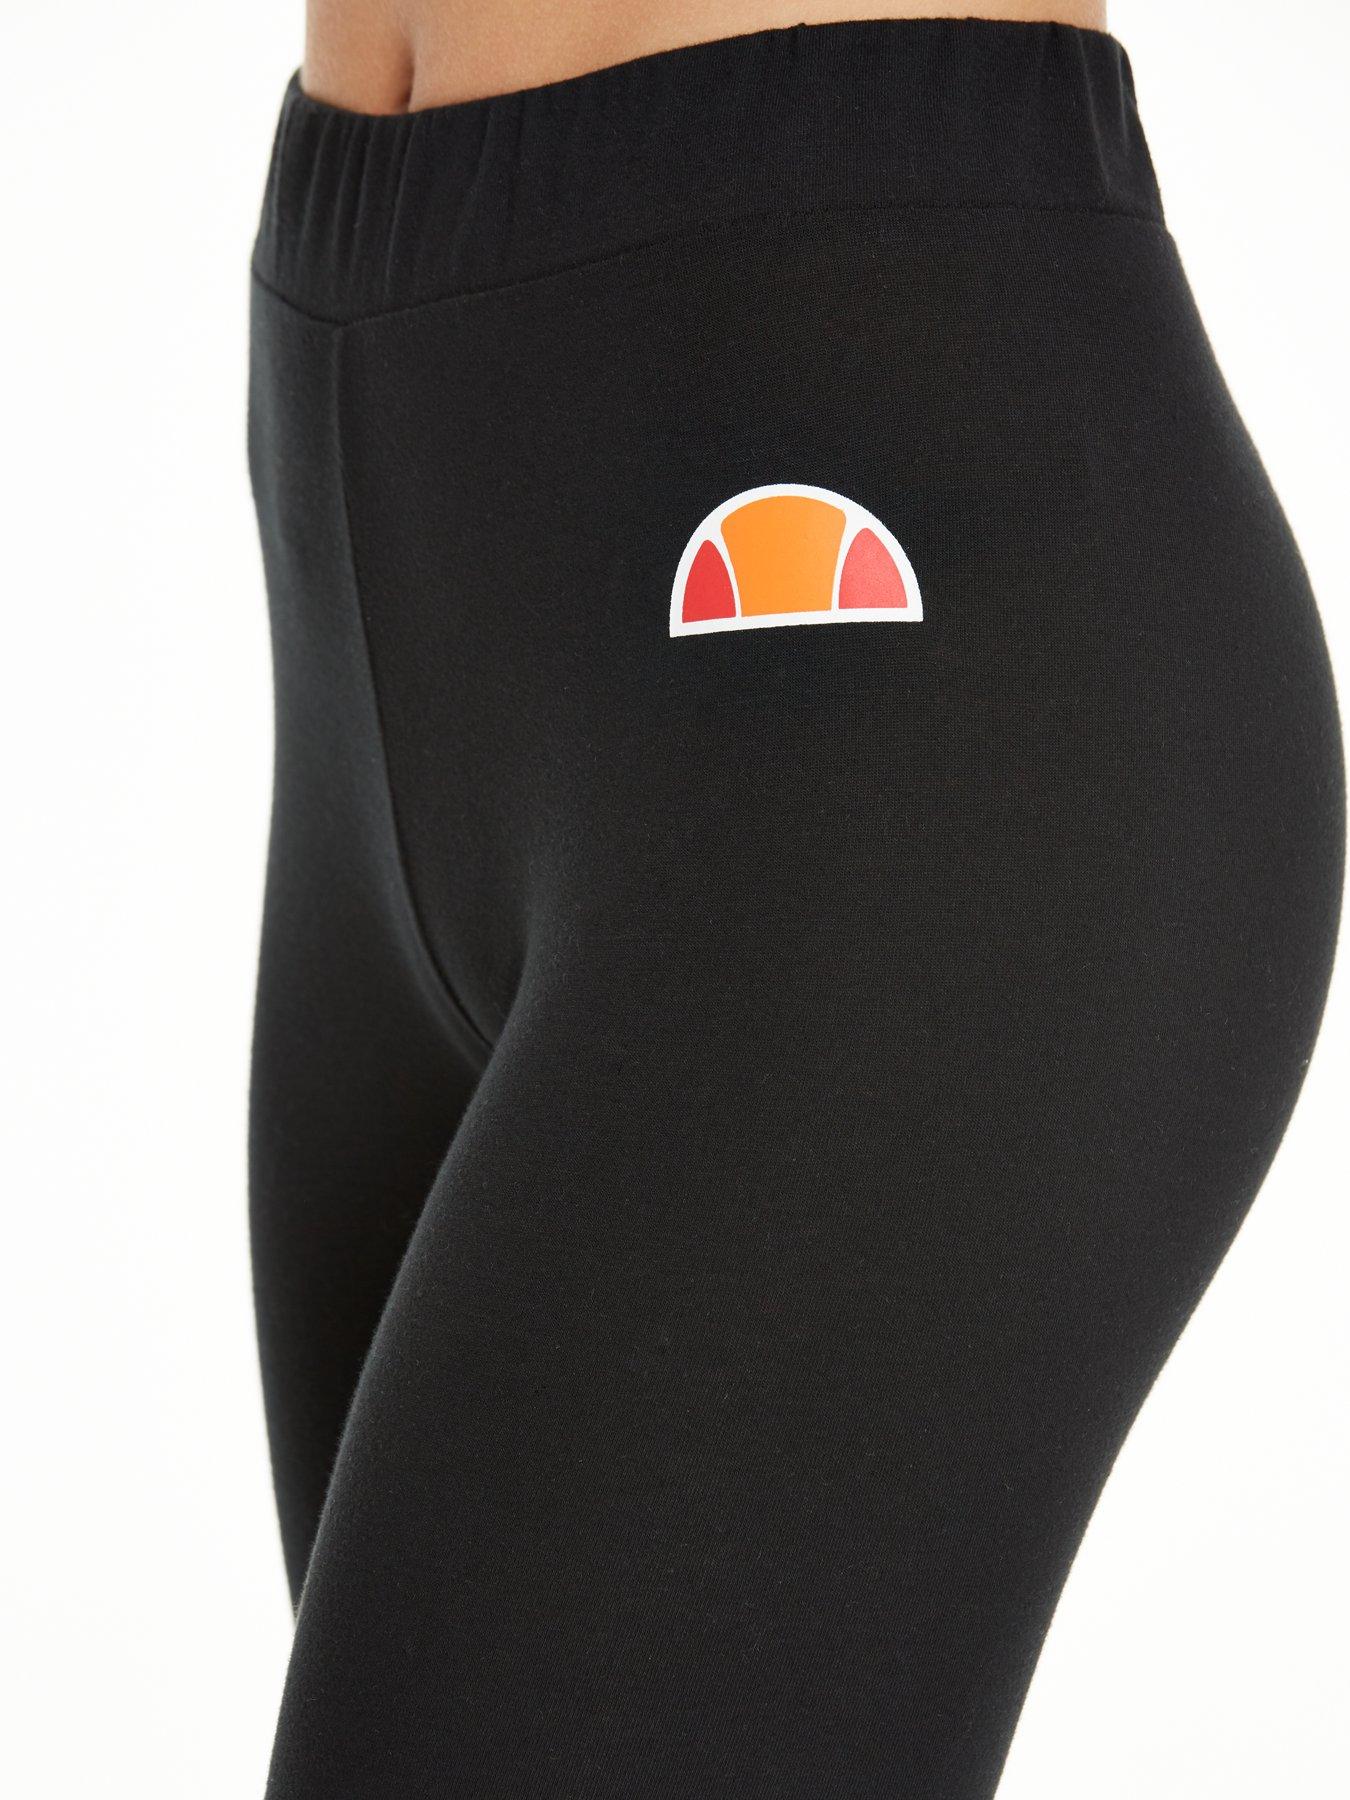 Solos 2 cotton mix leggings with logo print on the leg, black, Ellesse